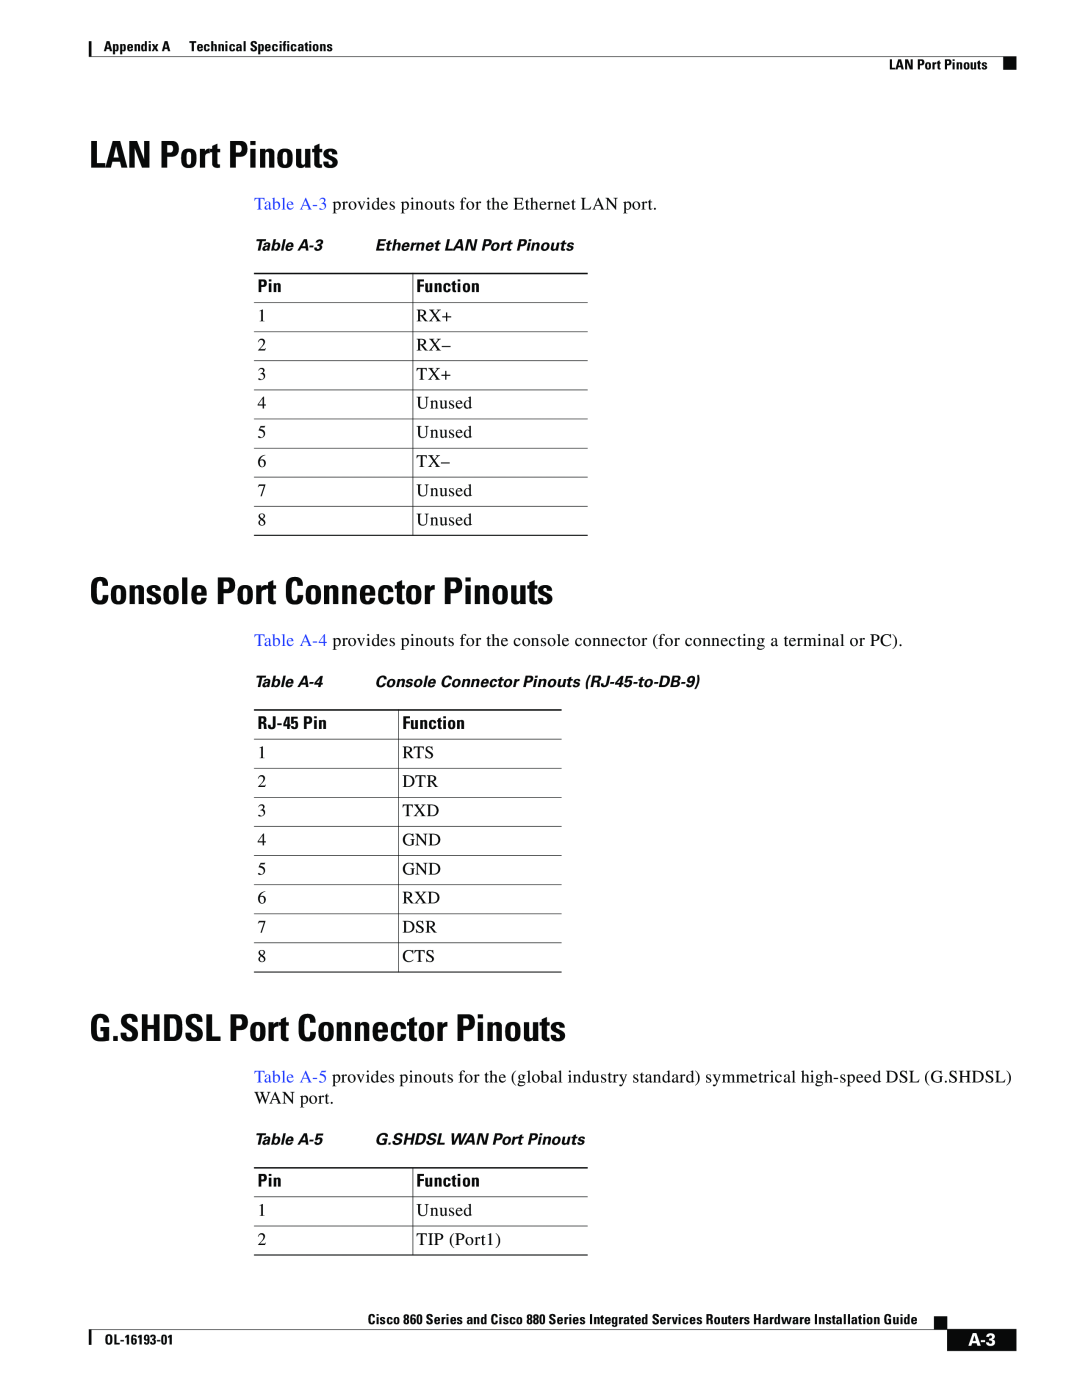 Cisco Systems HIG880, C892FSPK9, 861W LAN Port Pinouts, Console Port Connector Pinouts, G.SHDSL Port Connector Pinouts 